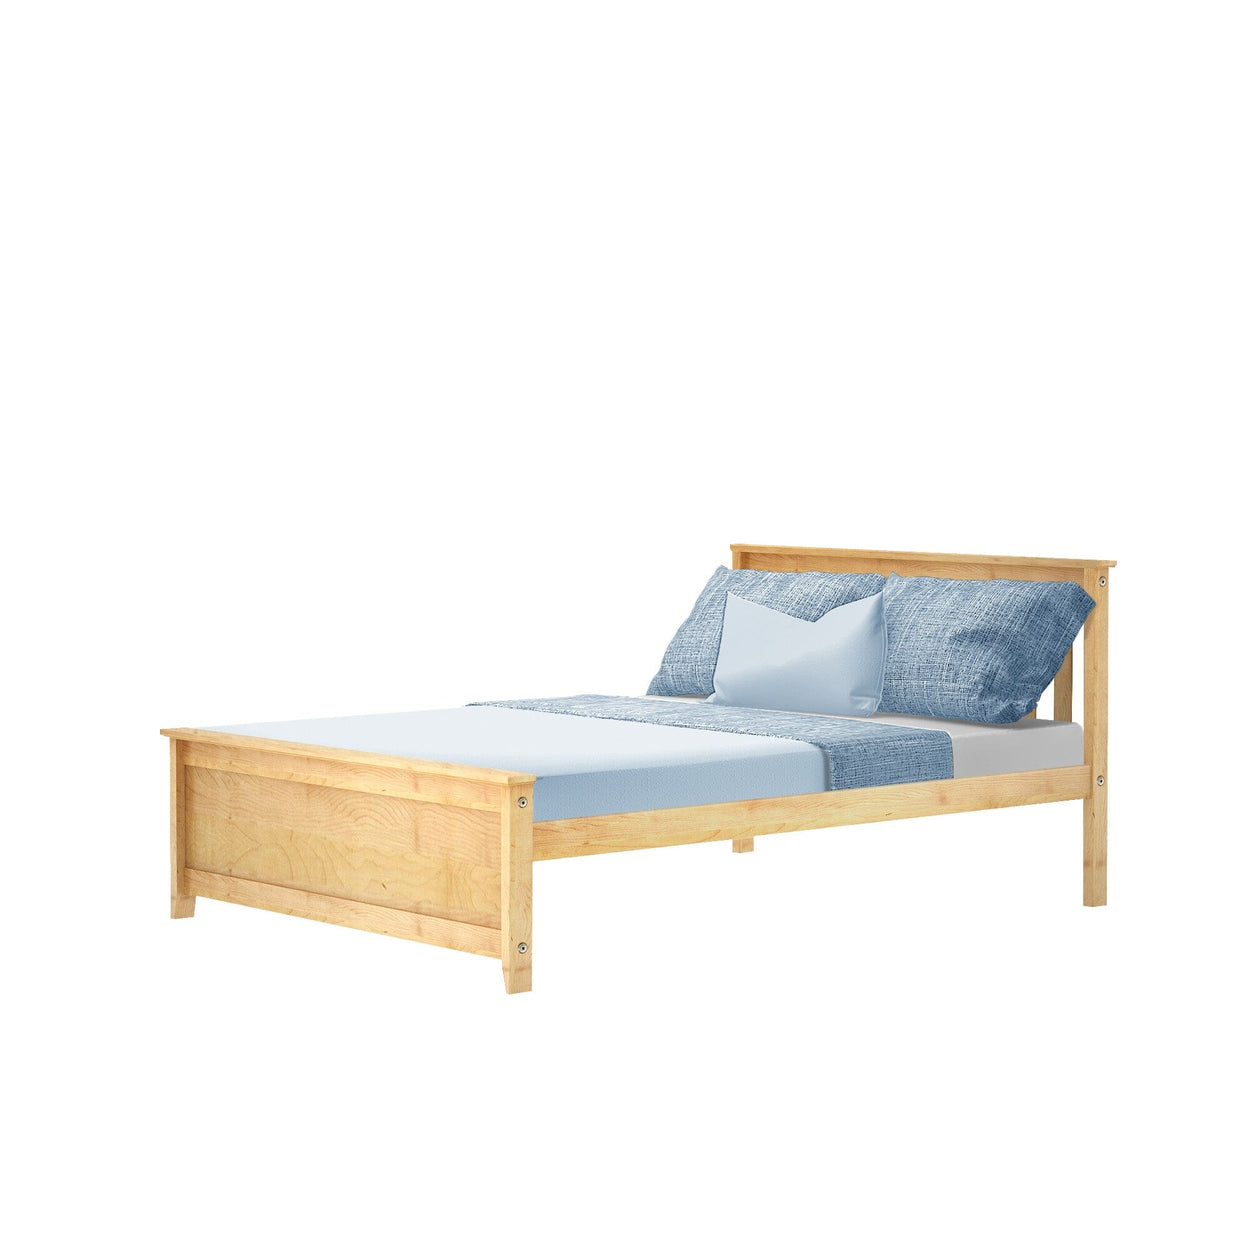 180211-001 : Kids Beds Classic Full-Size Platform Bed, Natural